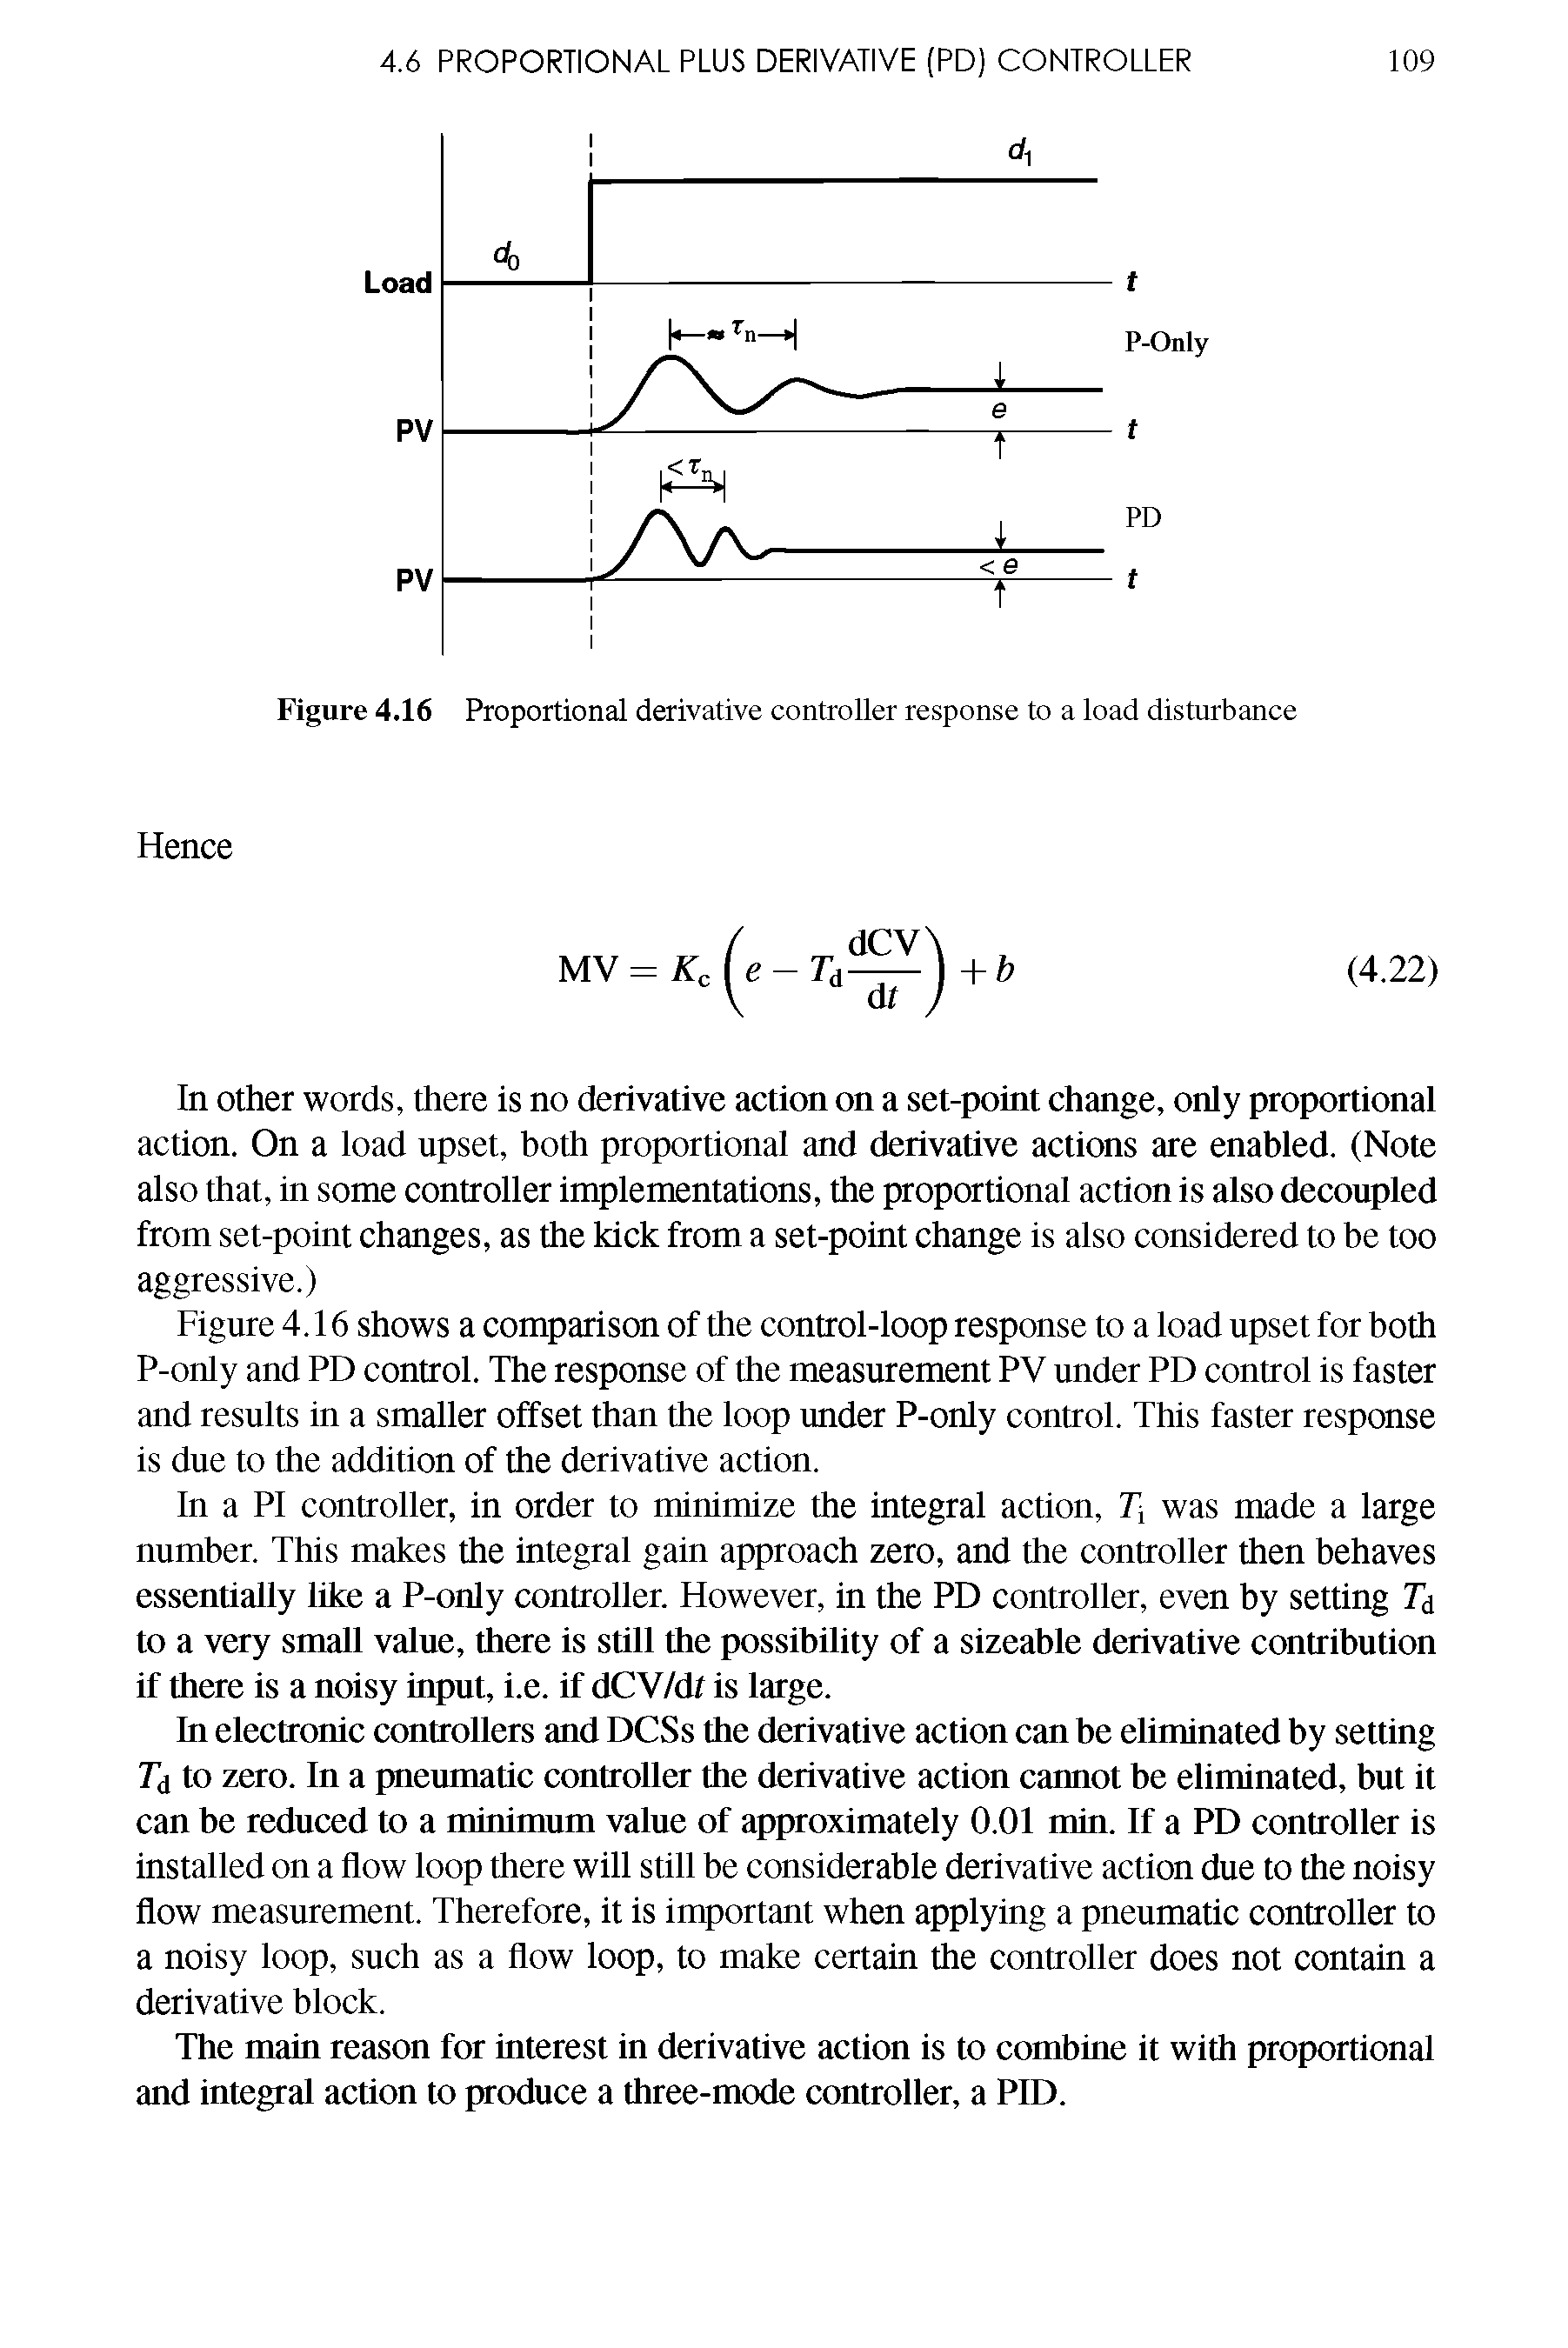 Figure 4.16 Proportional derivative controller response to a load disturbance...